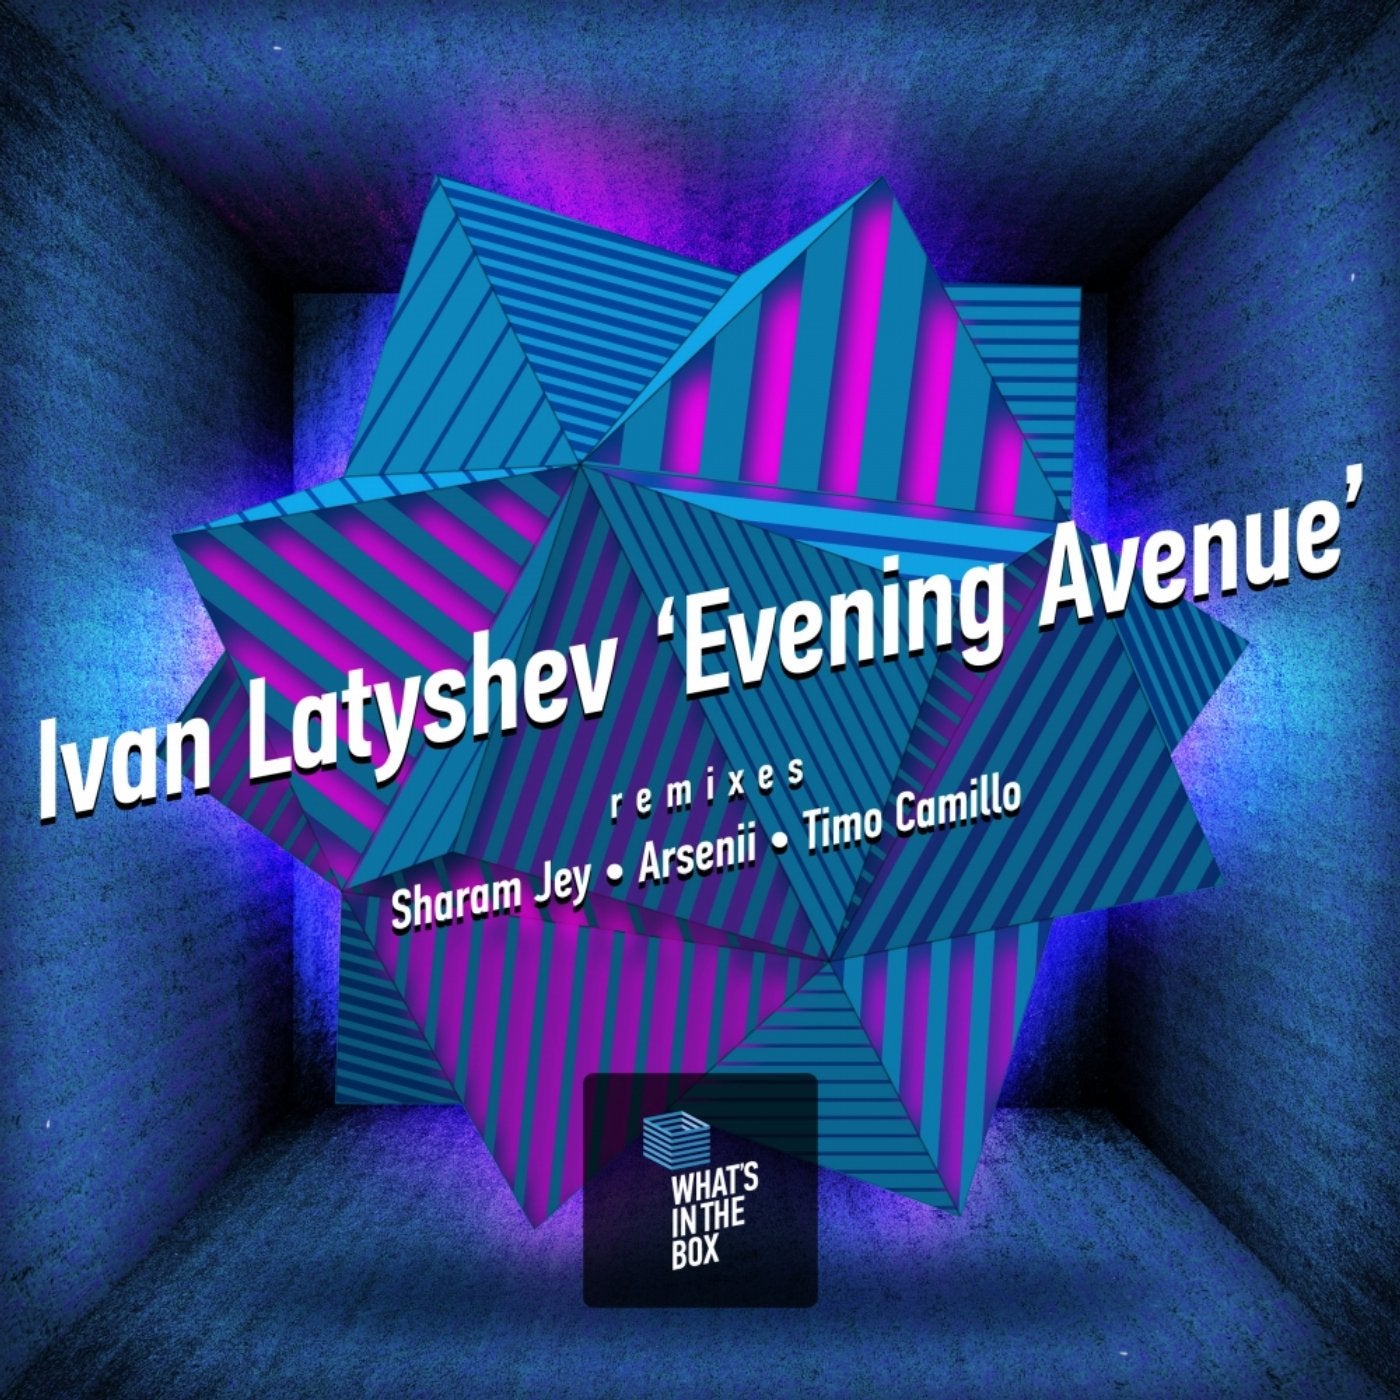 Evening Avenue